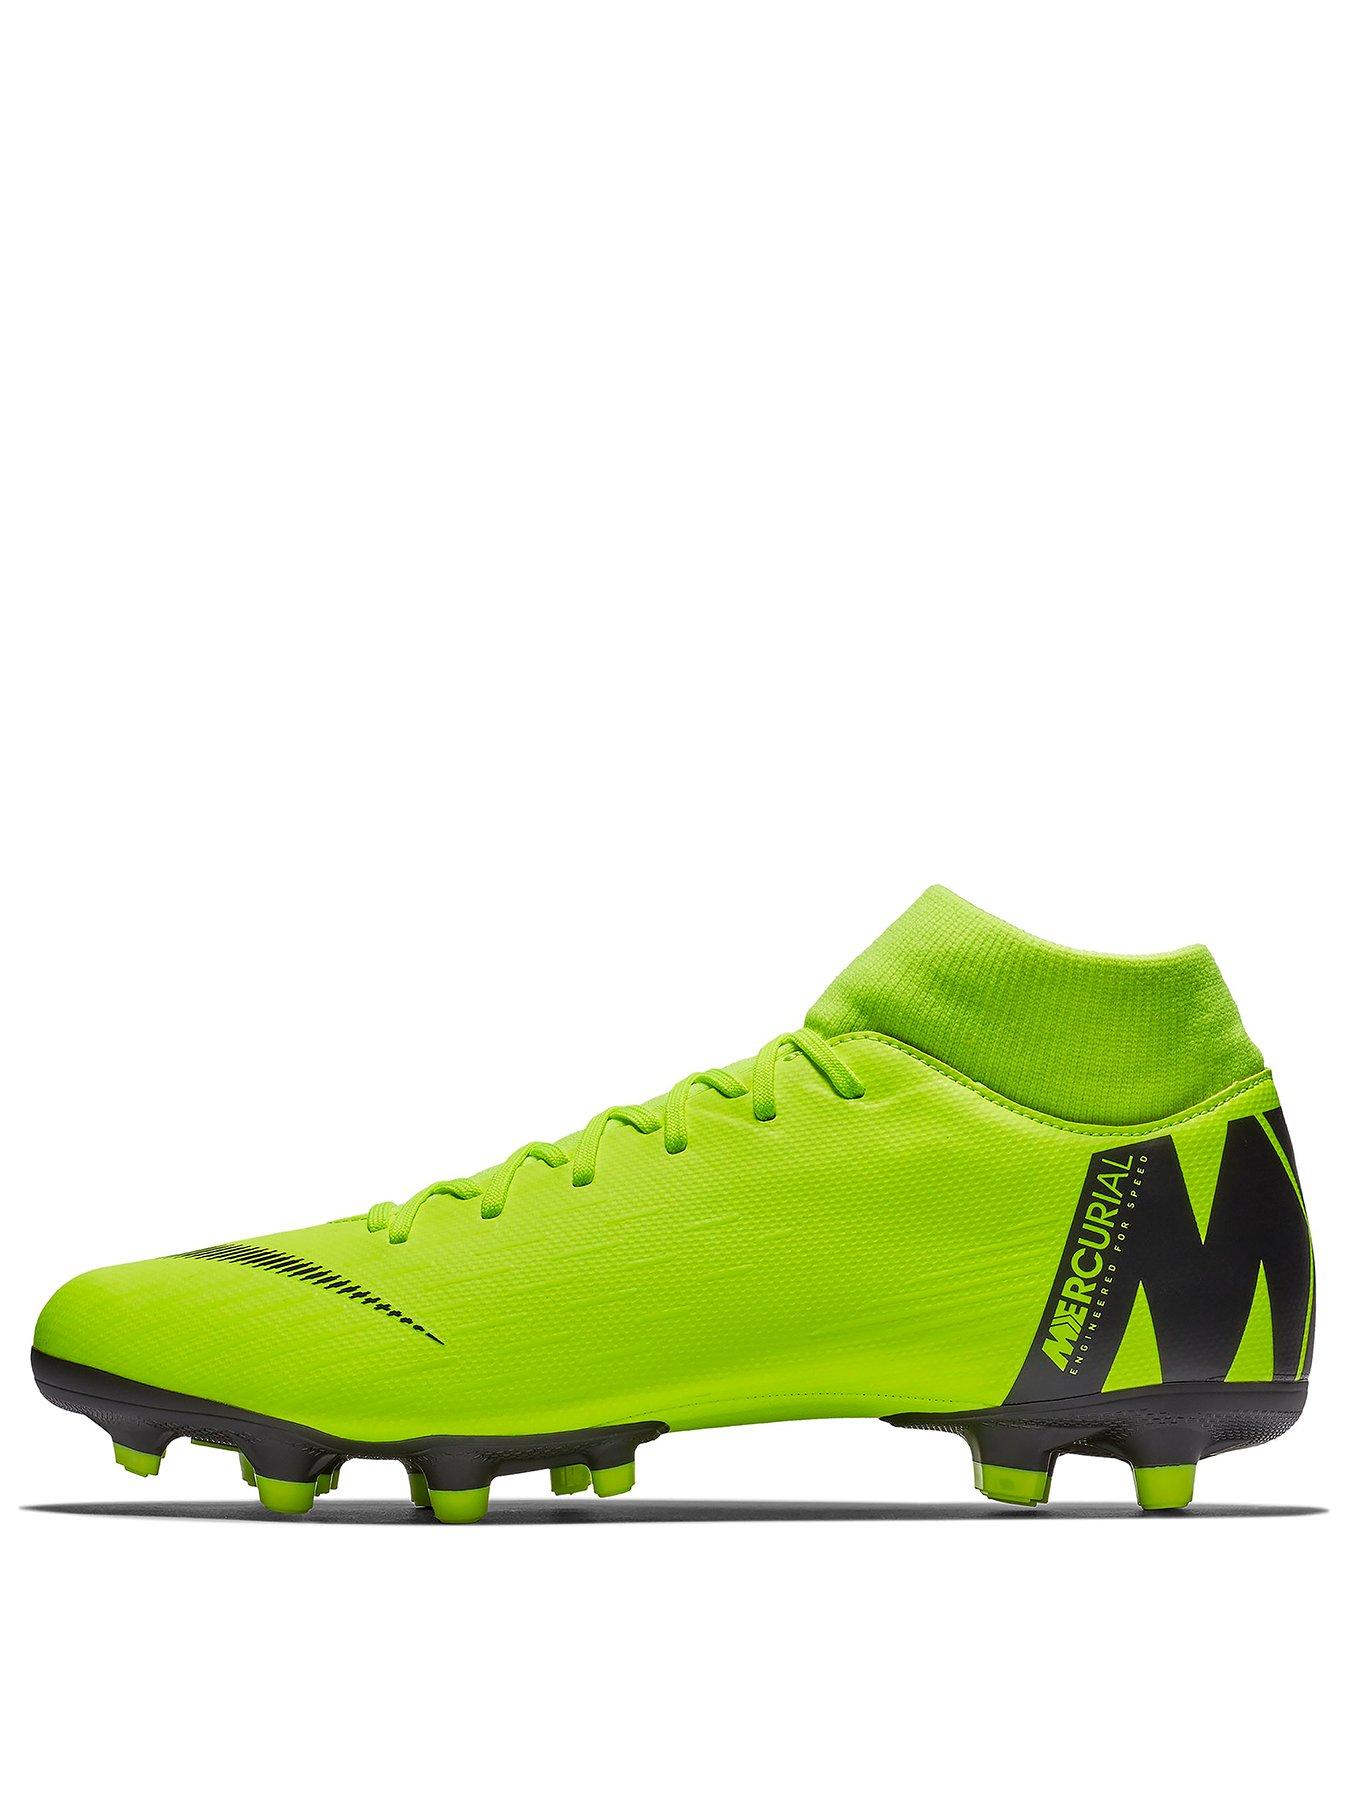 Junior Nike Football Boots Nike Hypervenom Phelon TF